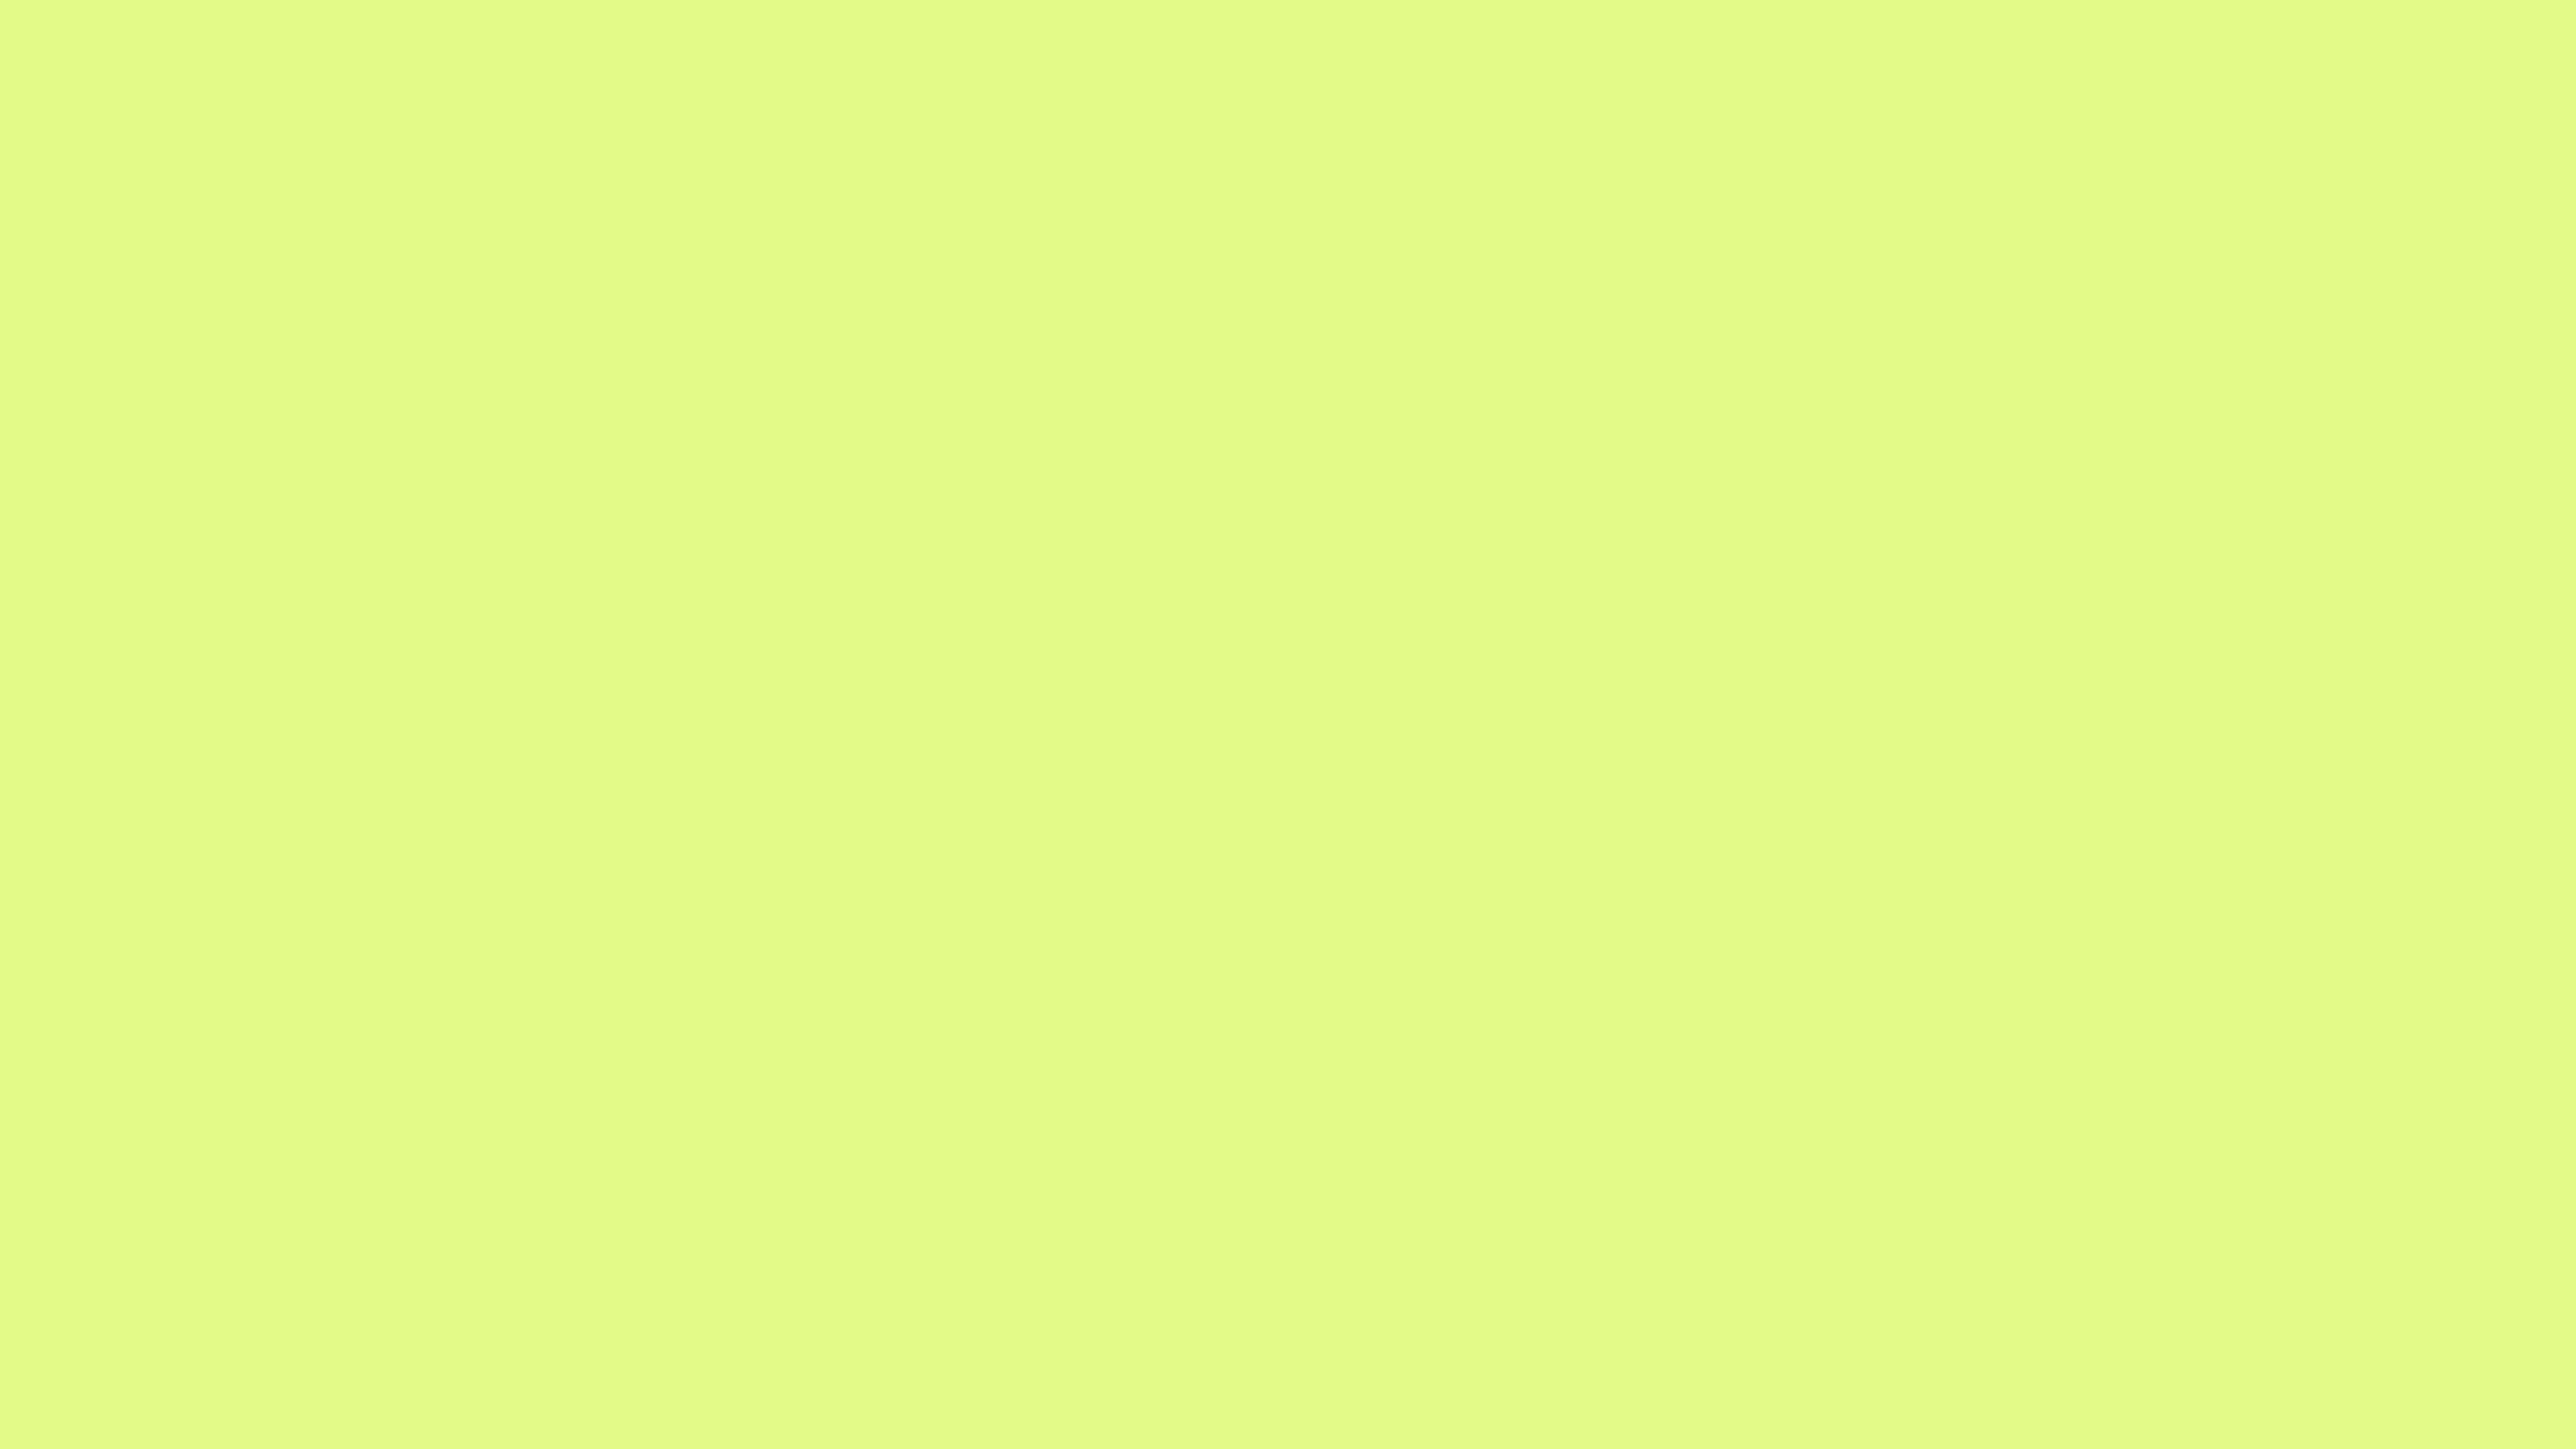 7680x4320 Midori Solid Color Background